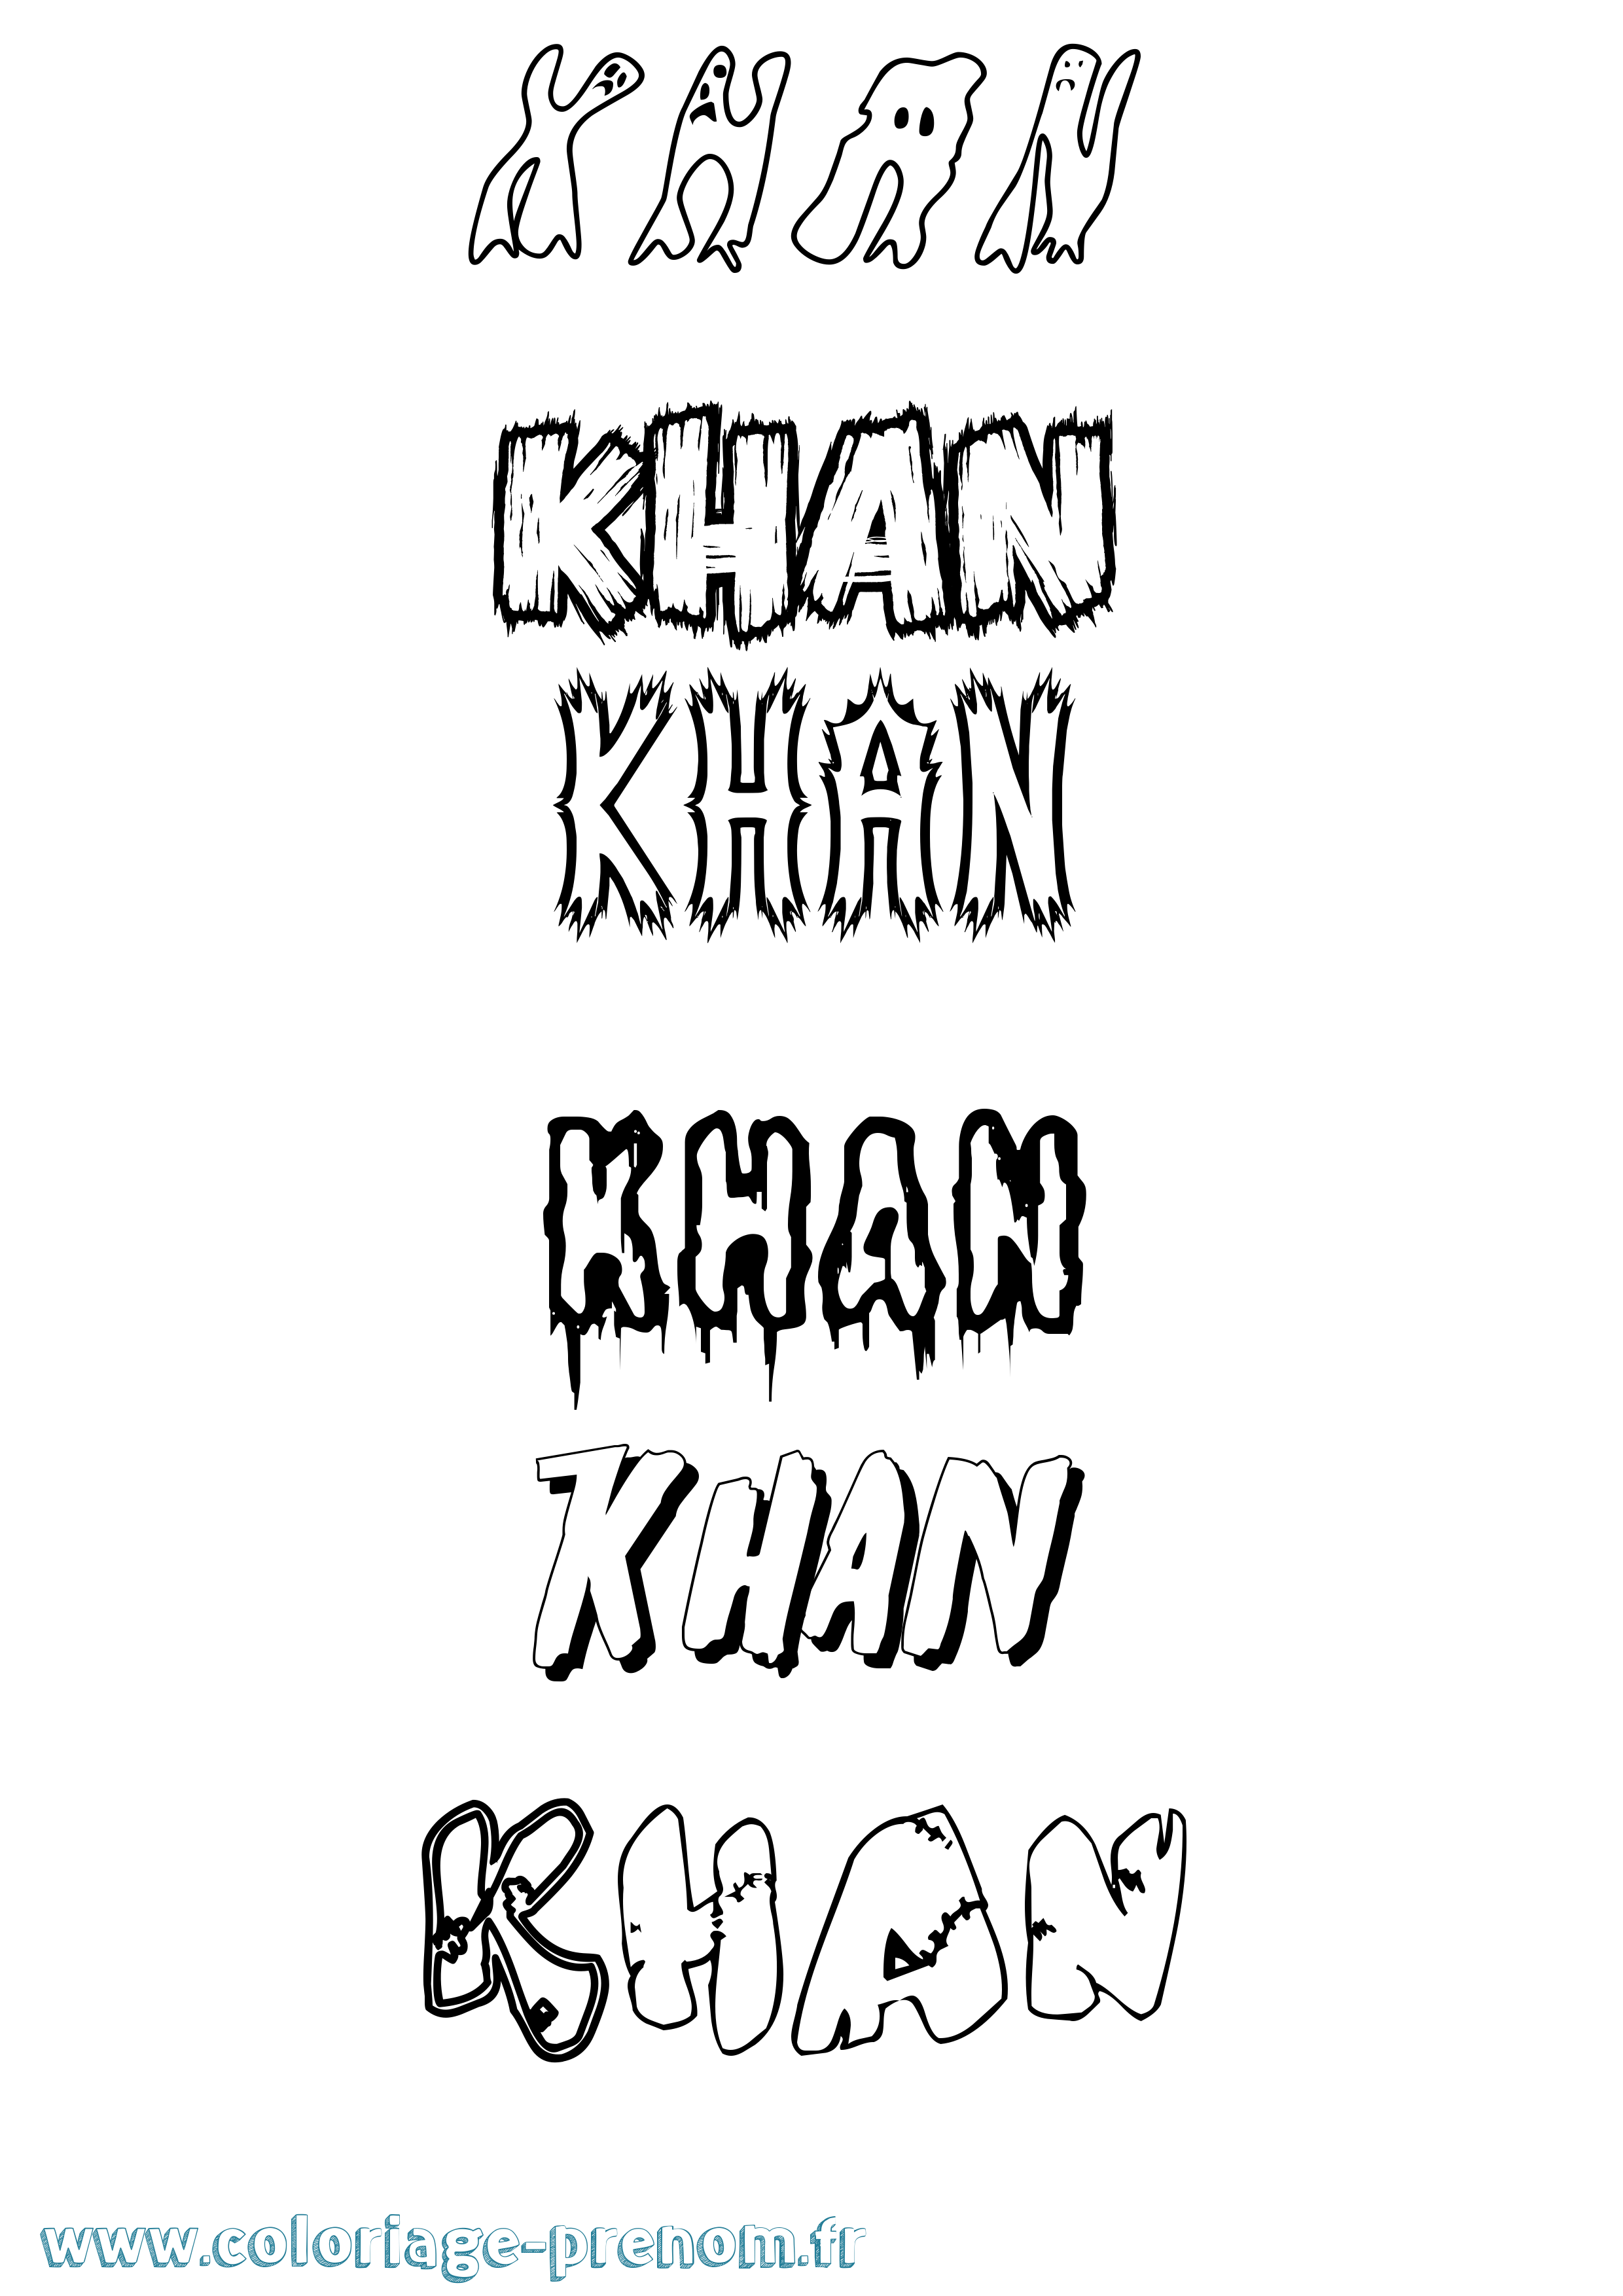 Coloriage prénom Khan Frisson